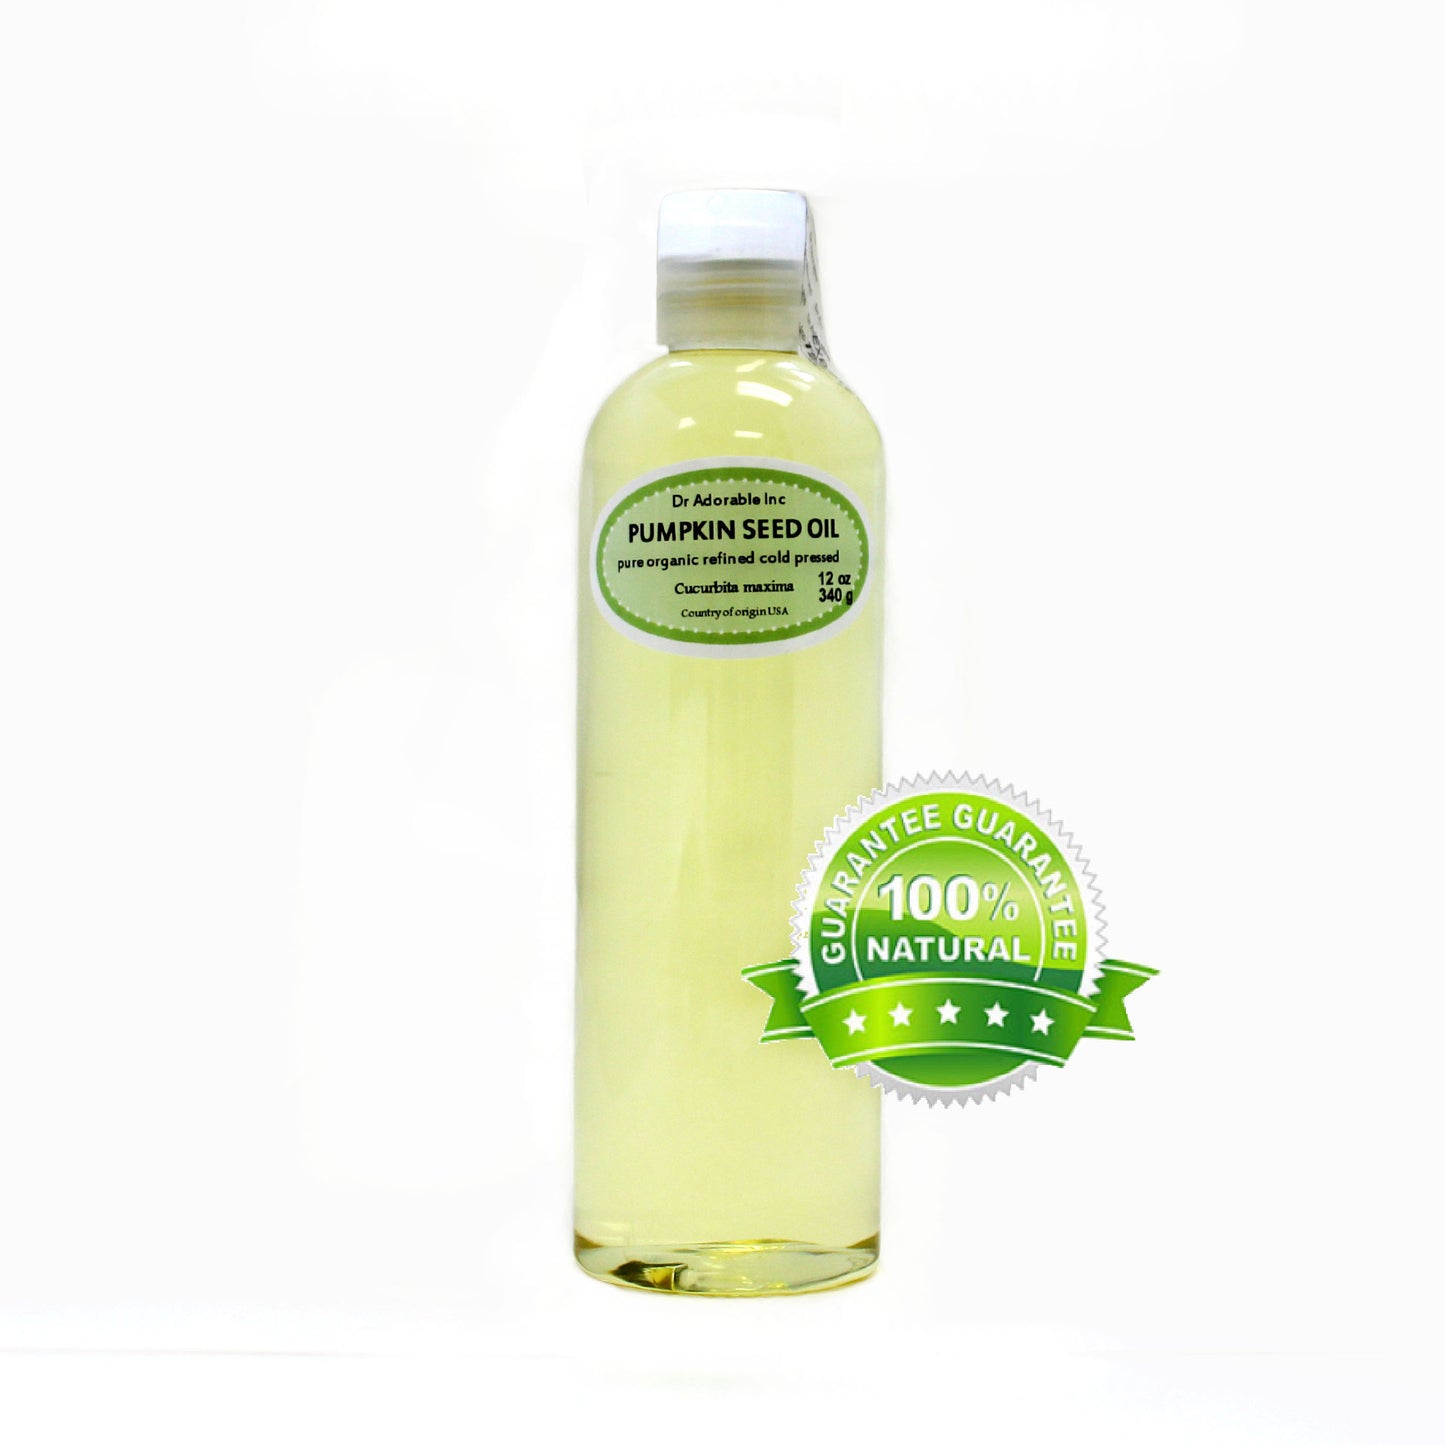 Pumpkin Seed Oil Refined - 100% Pure Natural Premium Organic Cold Pressed